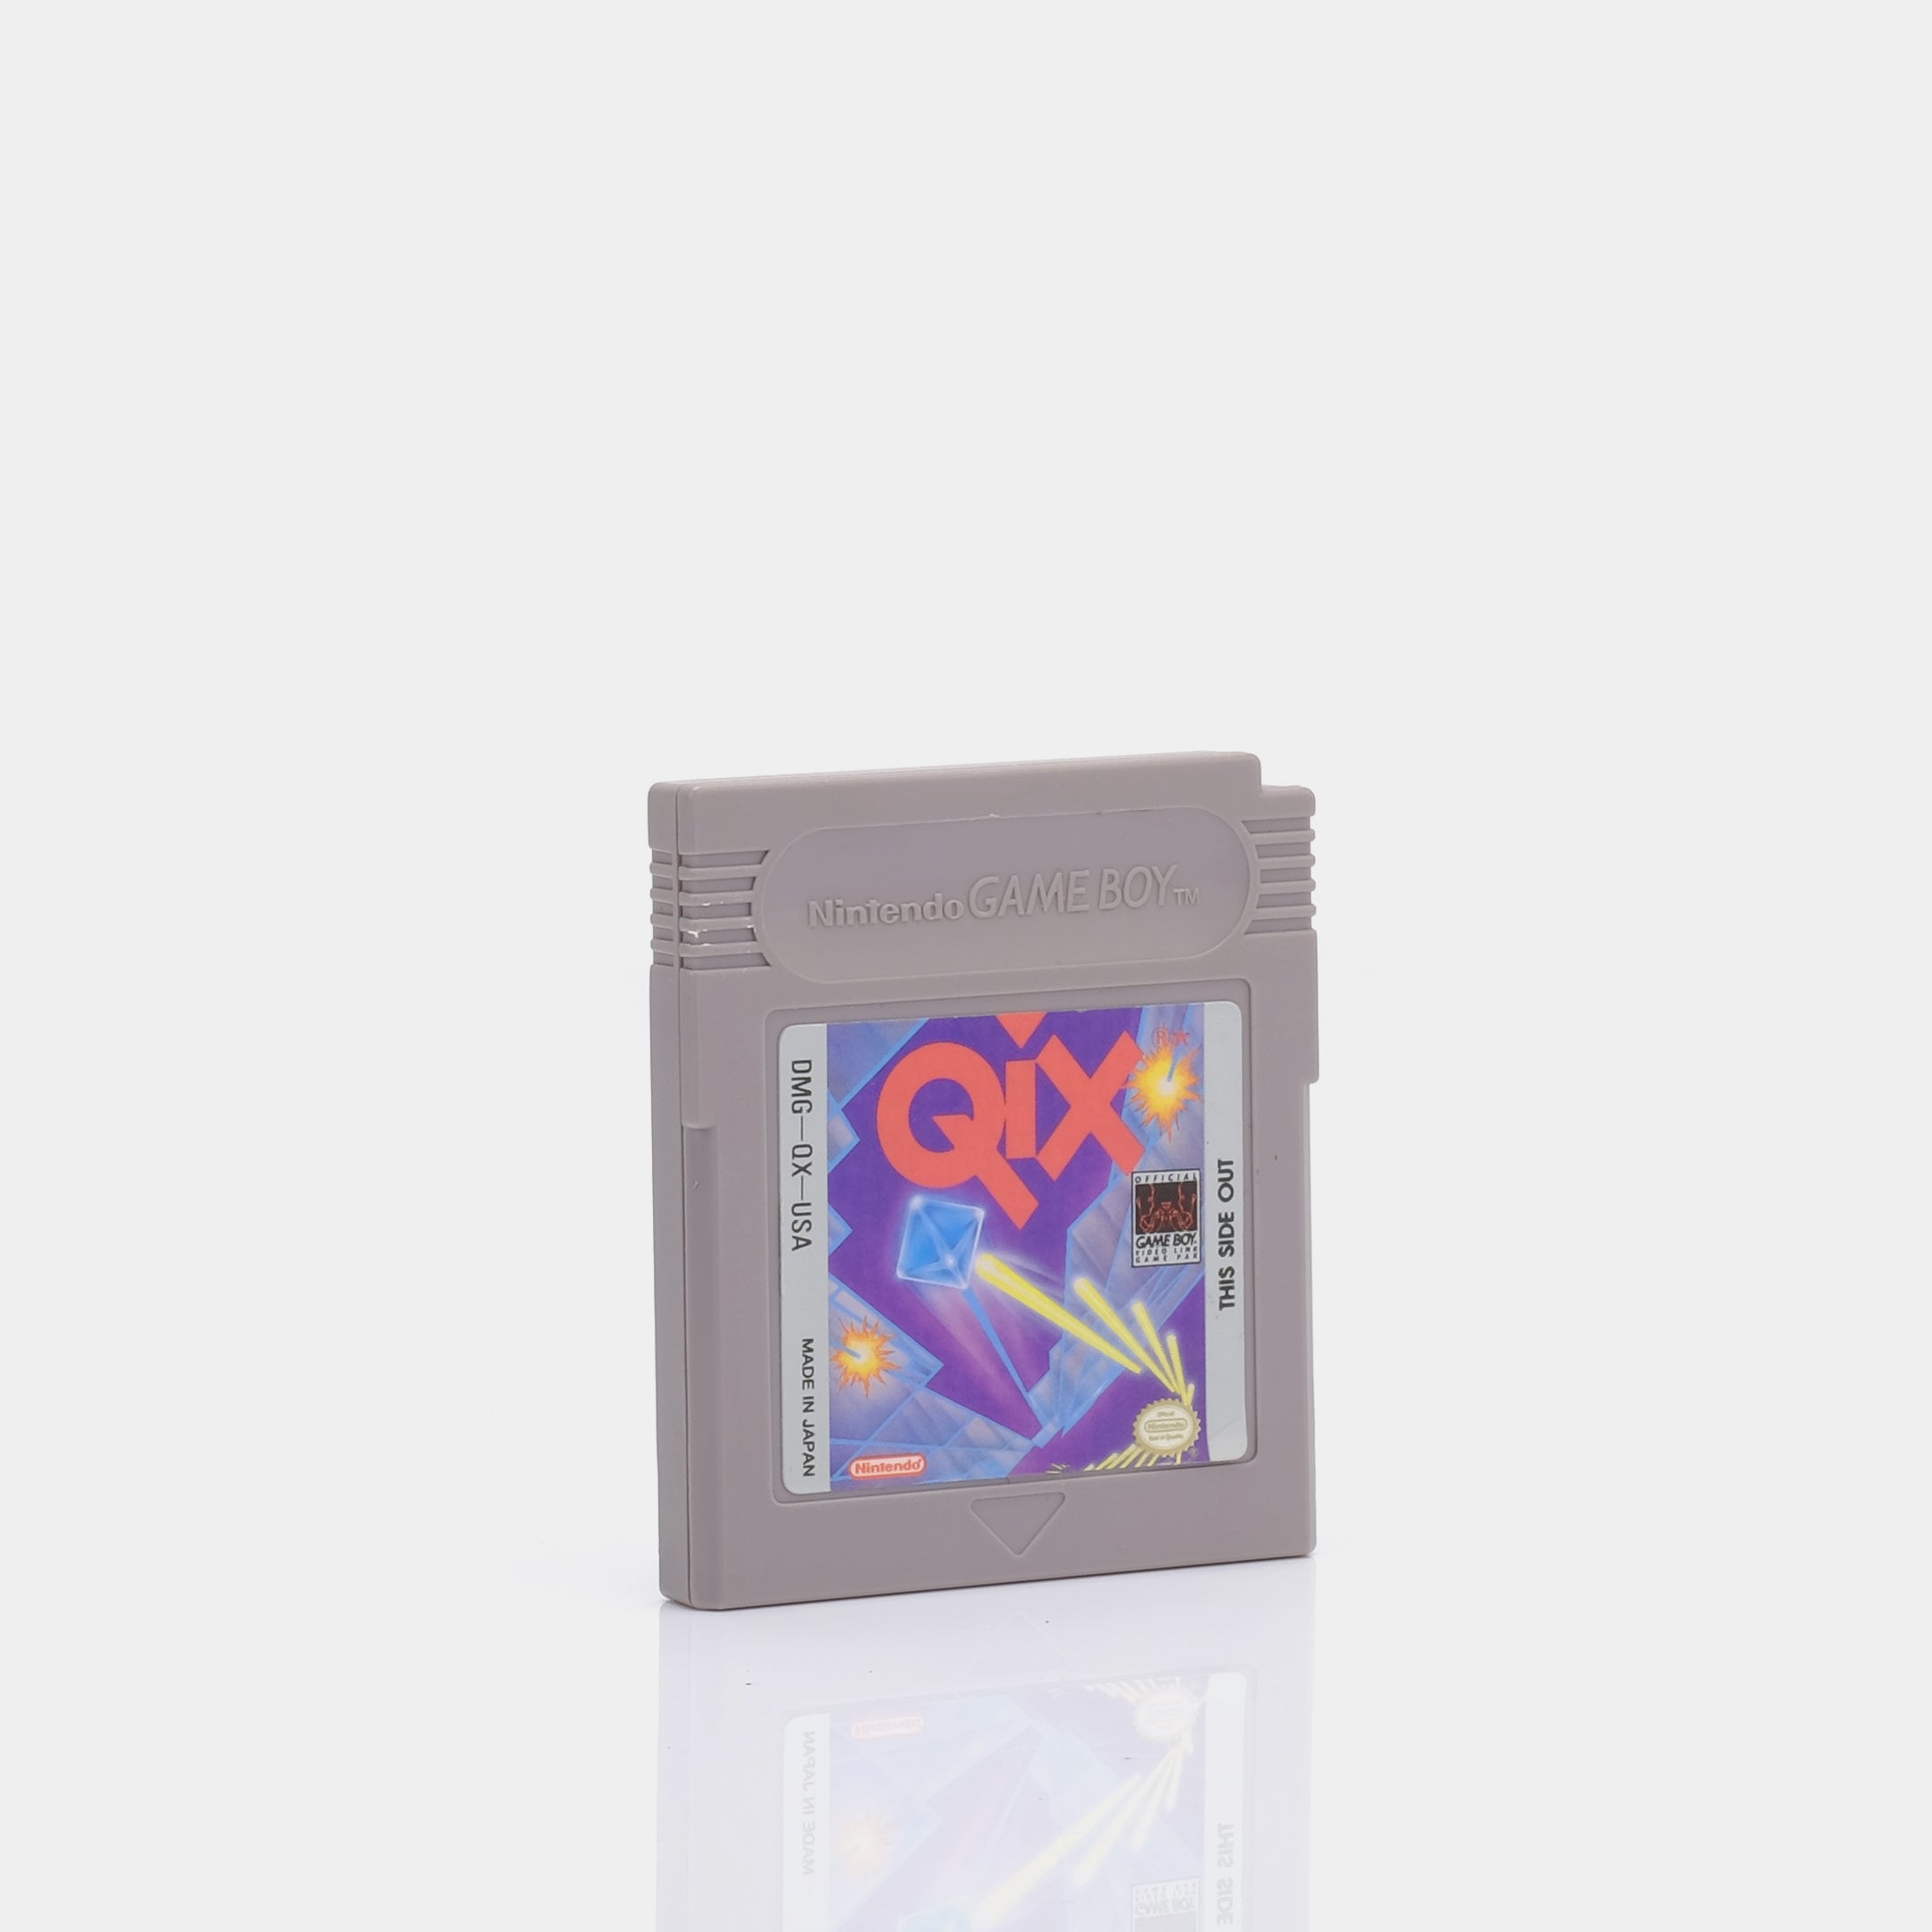 Qix (1990) Game Boy Game